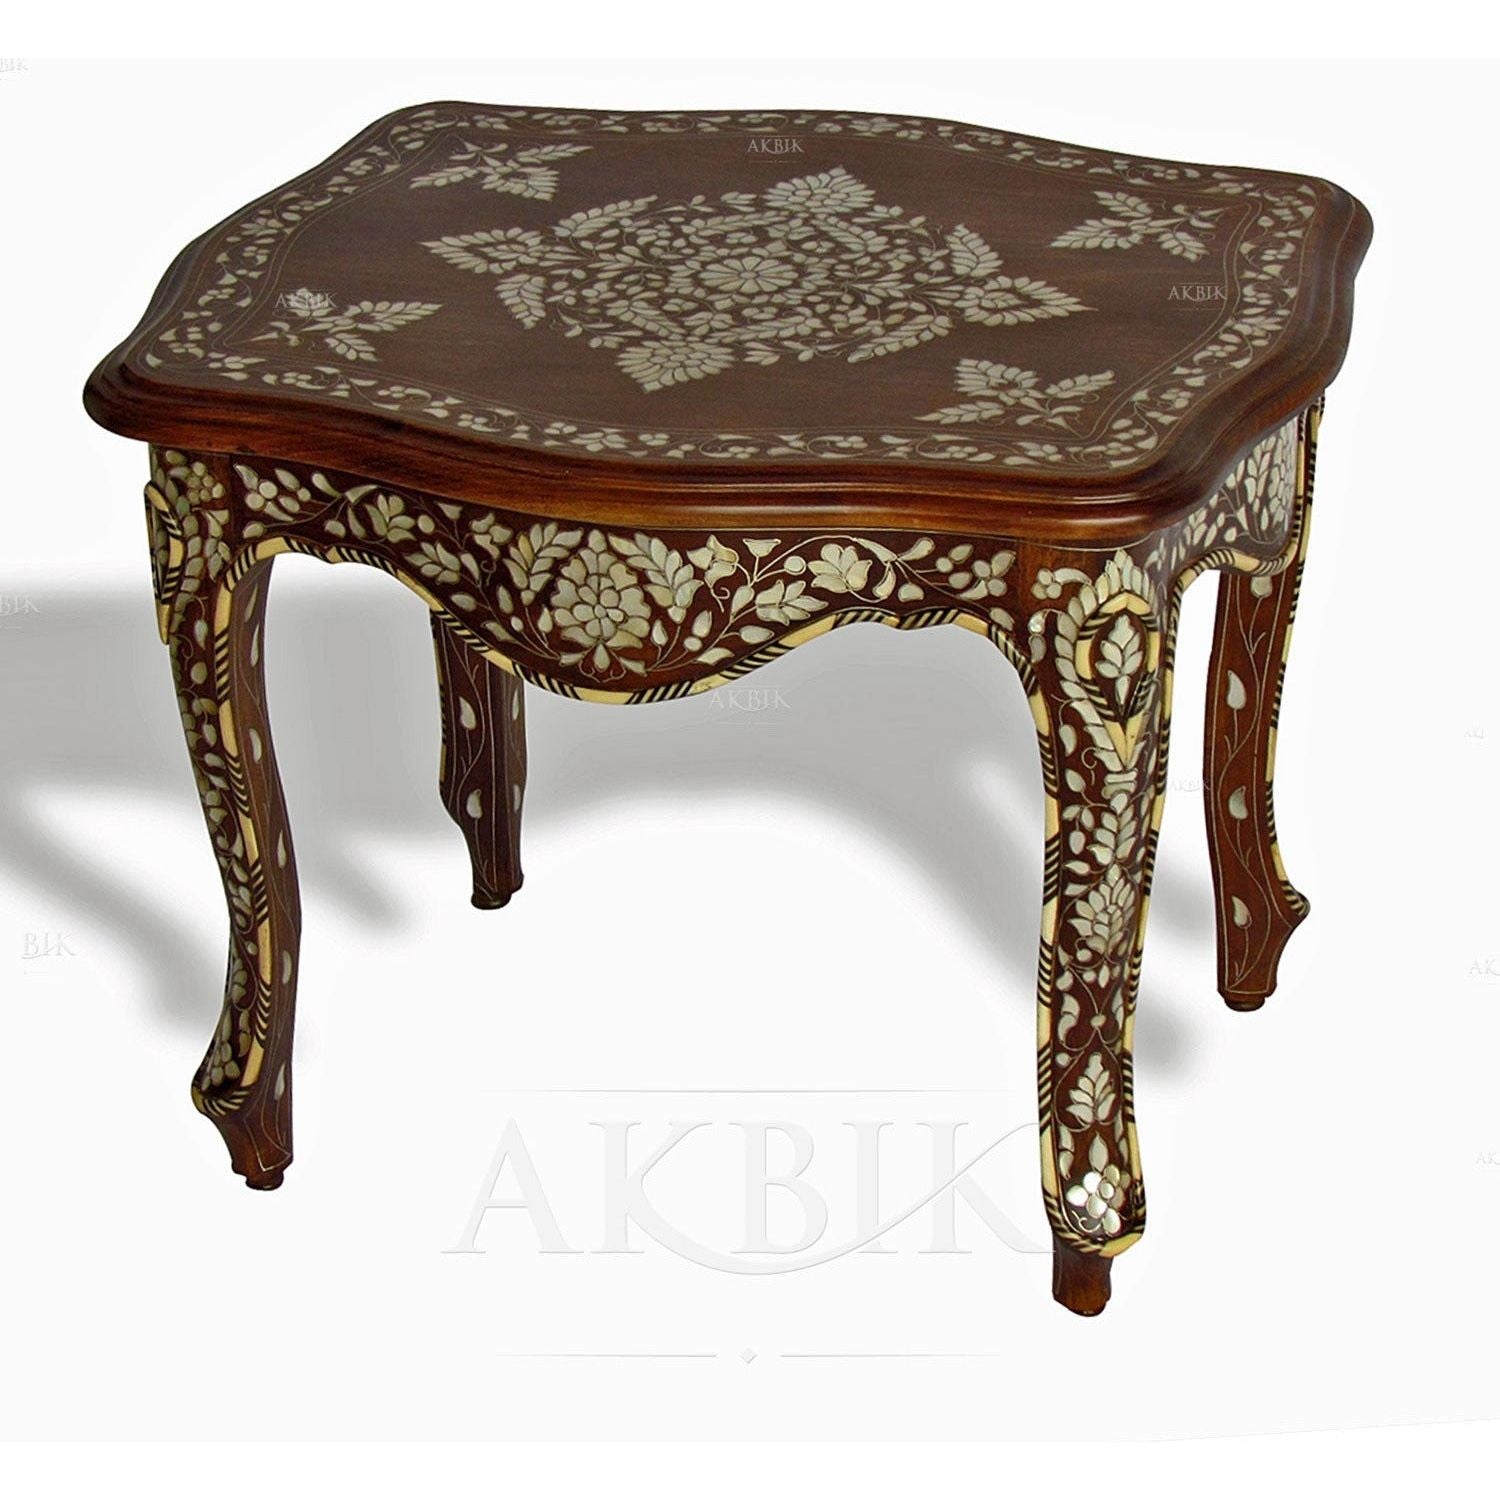 MOTHER OF PEARL SIDE TABLE - AKBIK Furniture & Design